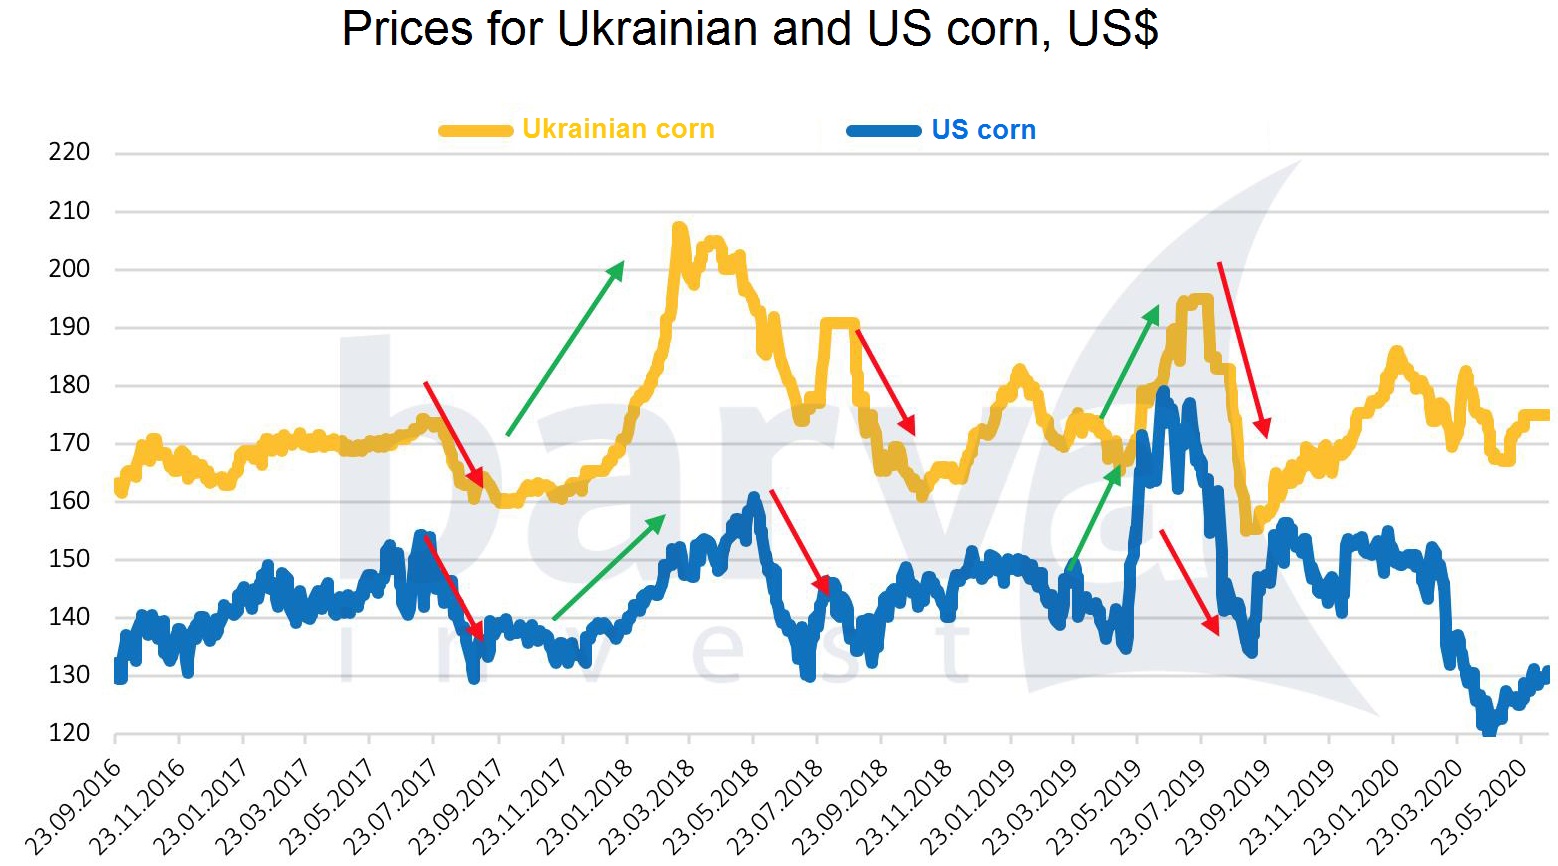 Ukrainian and US corn prices